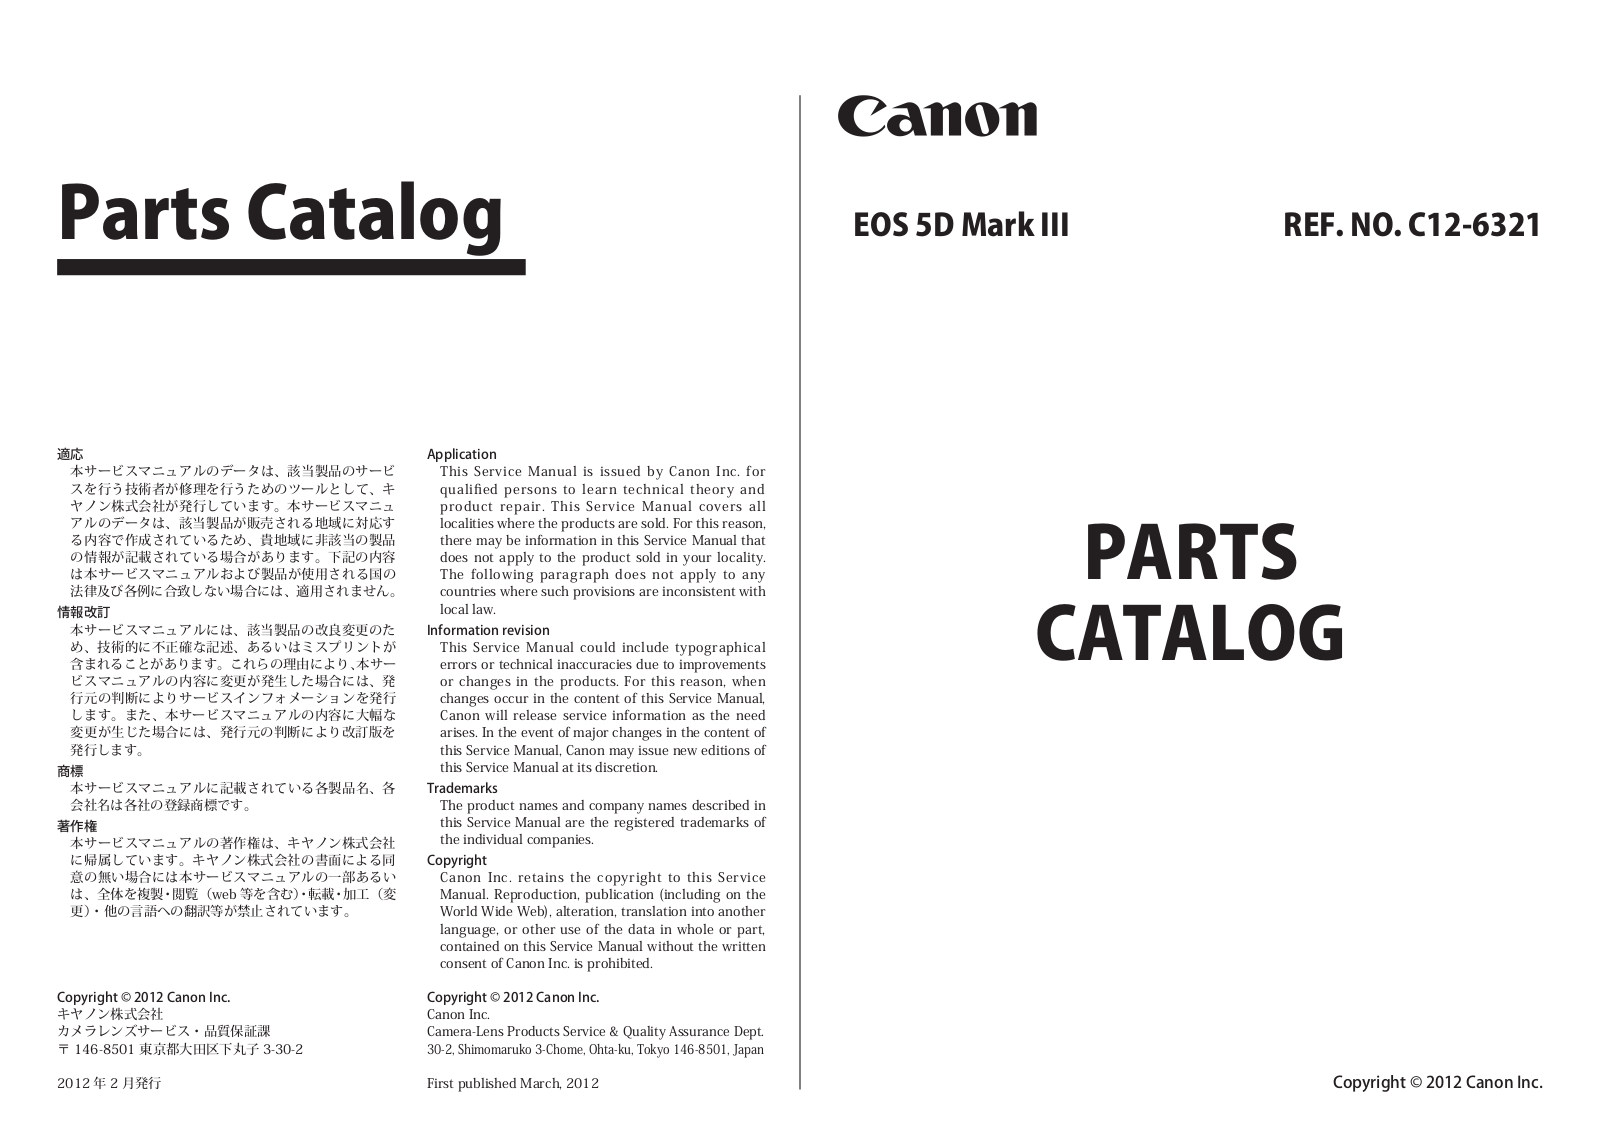 Canon EOS 5D Mark III Parts Catalog